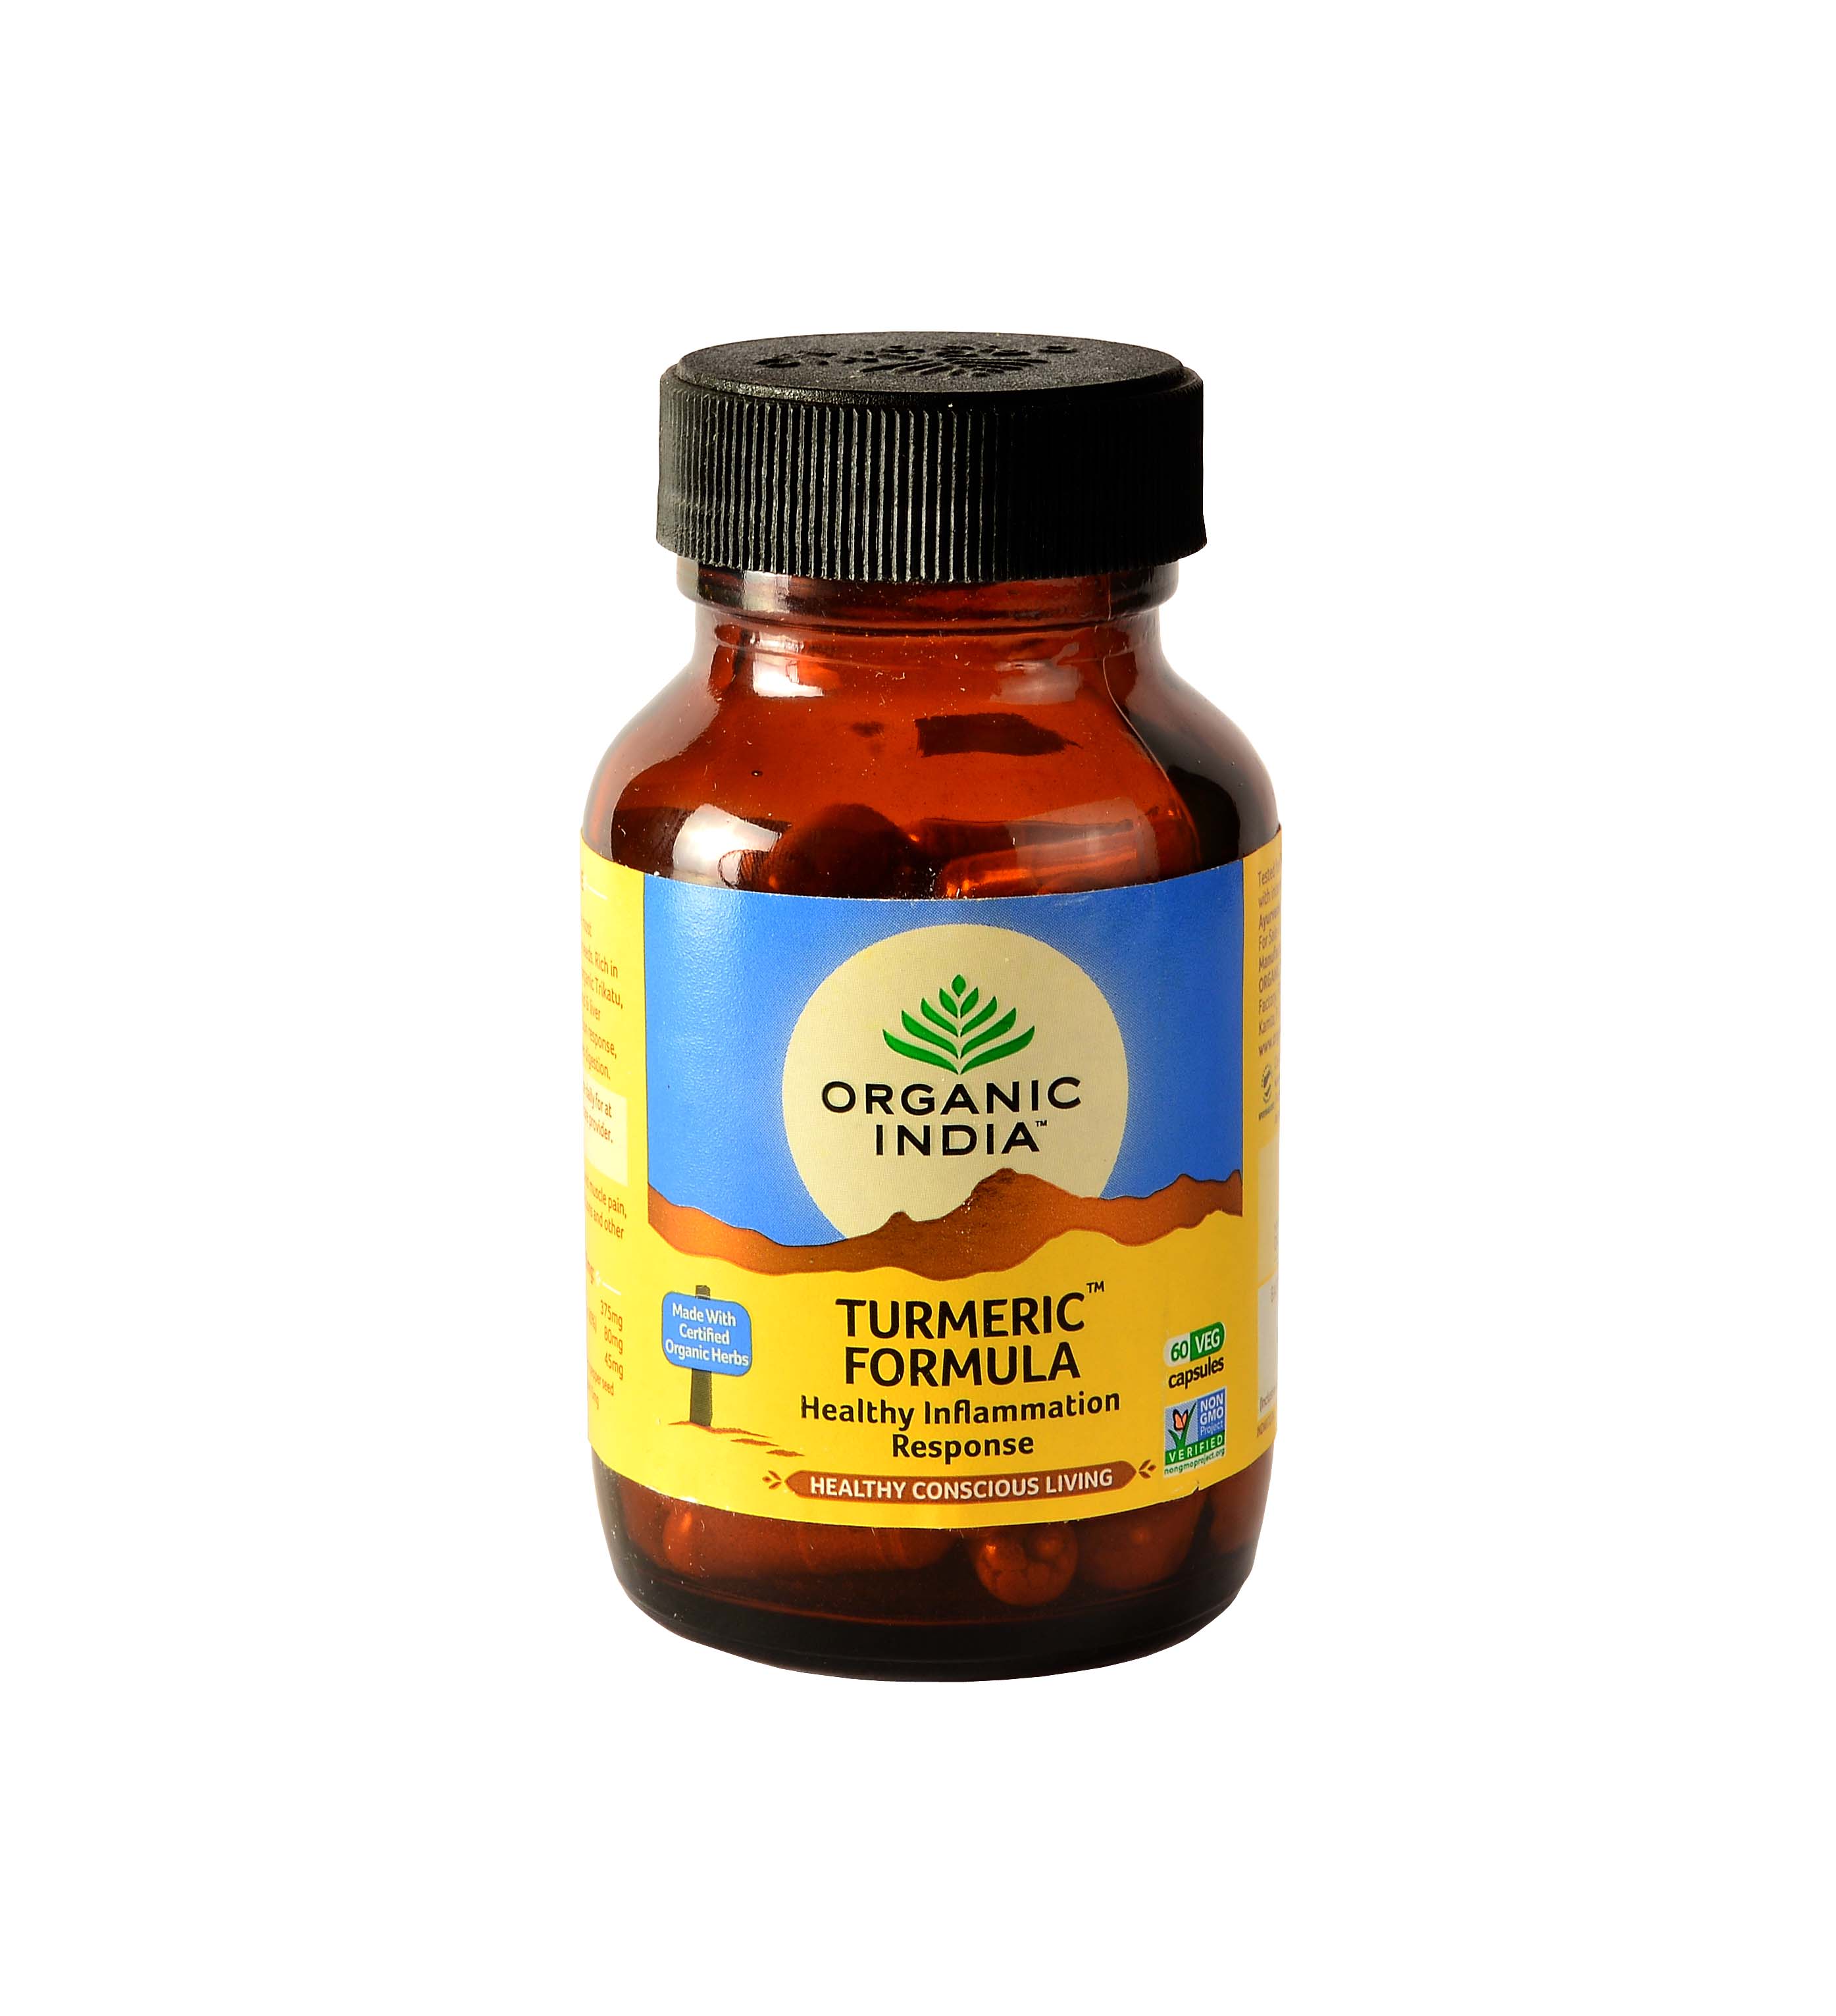 Buy Organic India Turmeric Capsule at Best Price Online